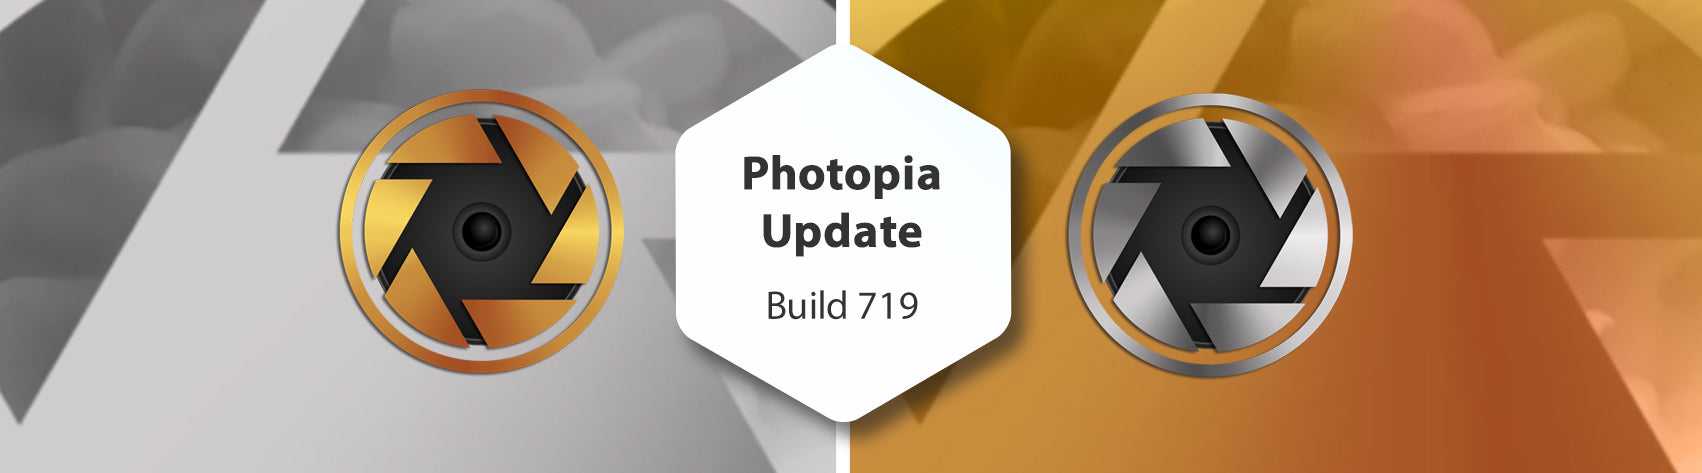 Photopia Update - Build 719